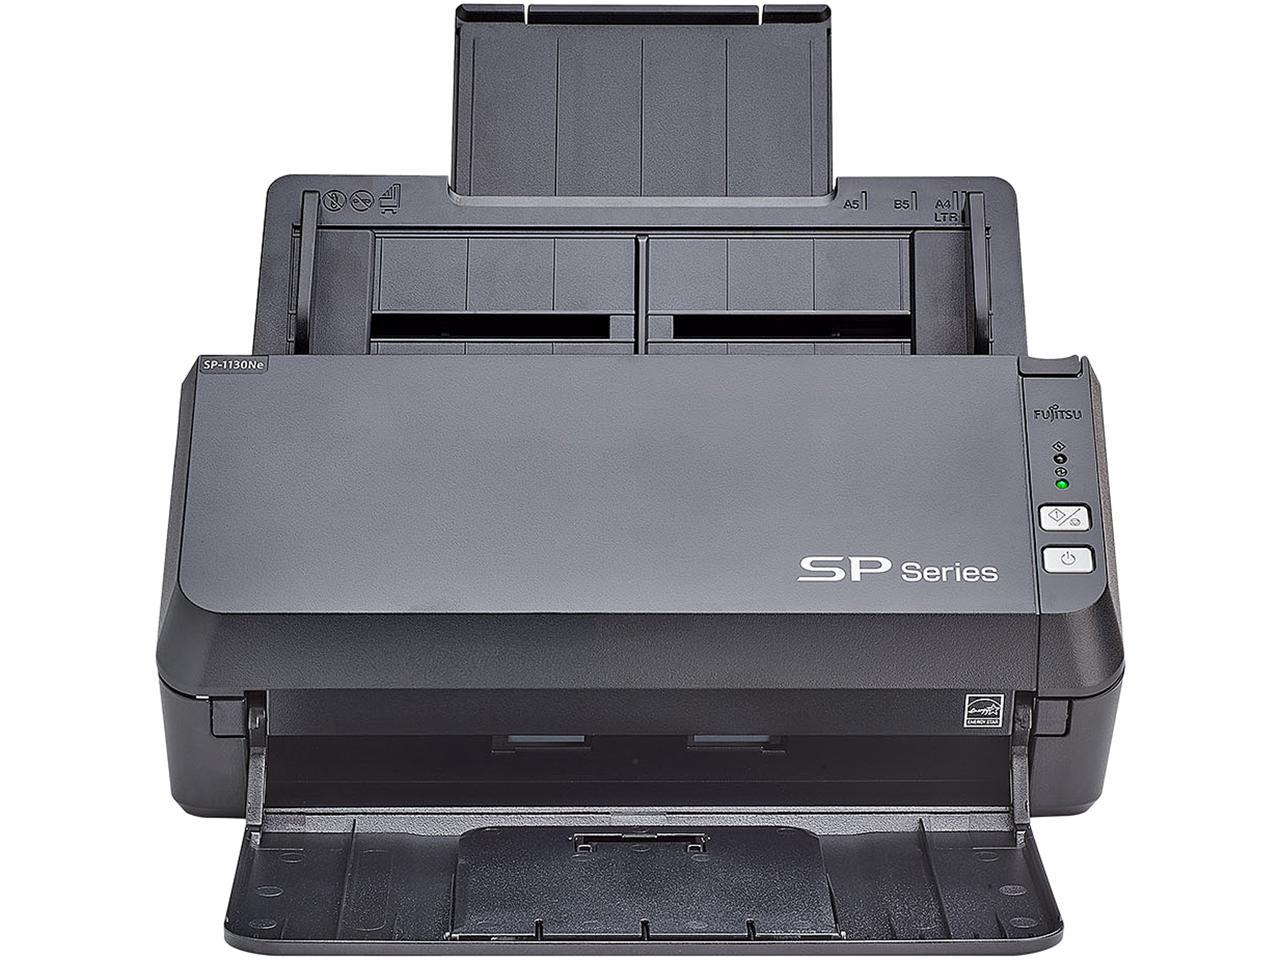 Fujitsu SP-1130Ne ADF (Automatic Document Feeder), Duplex Image Scanner